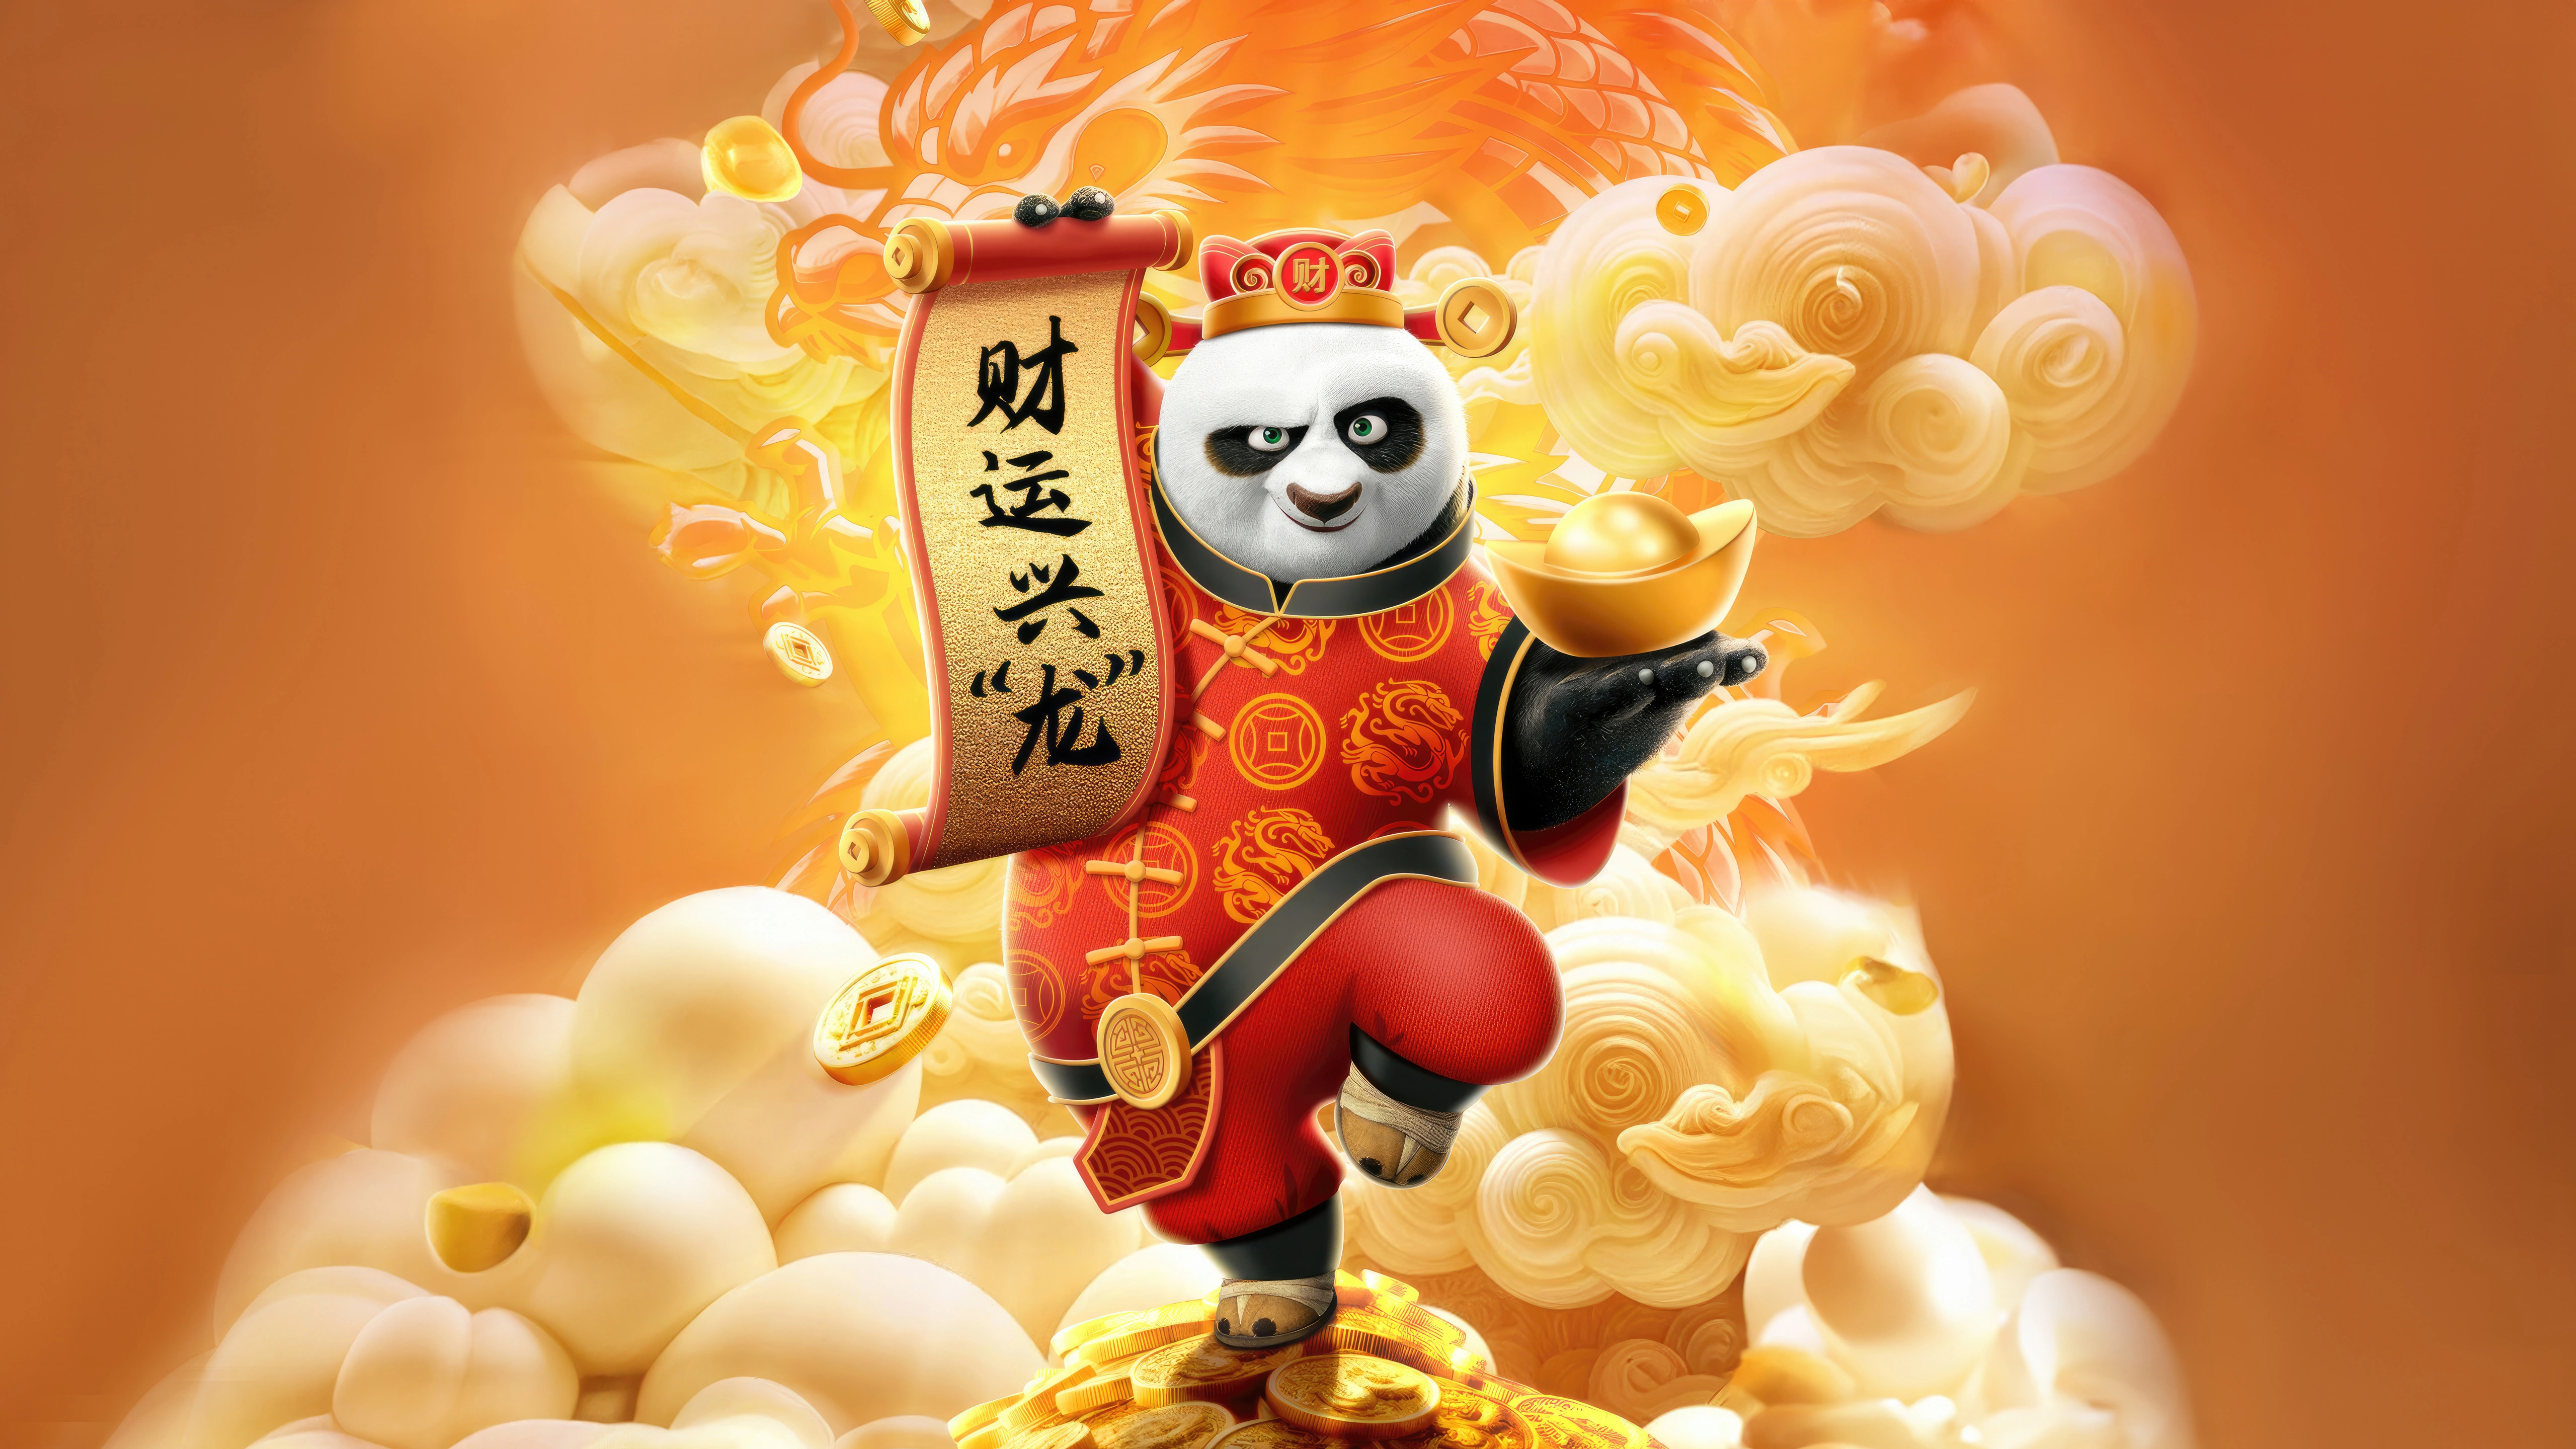 kung fu panda 4 chinese poster je.jpg